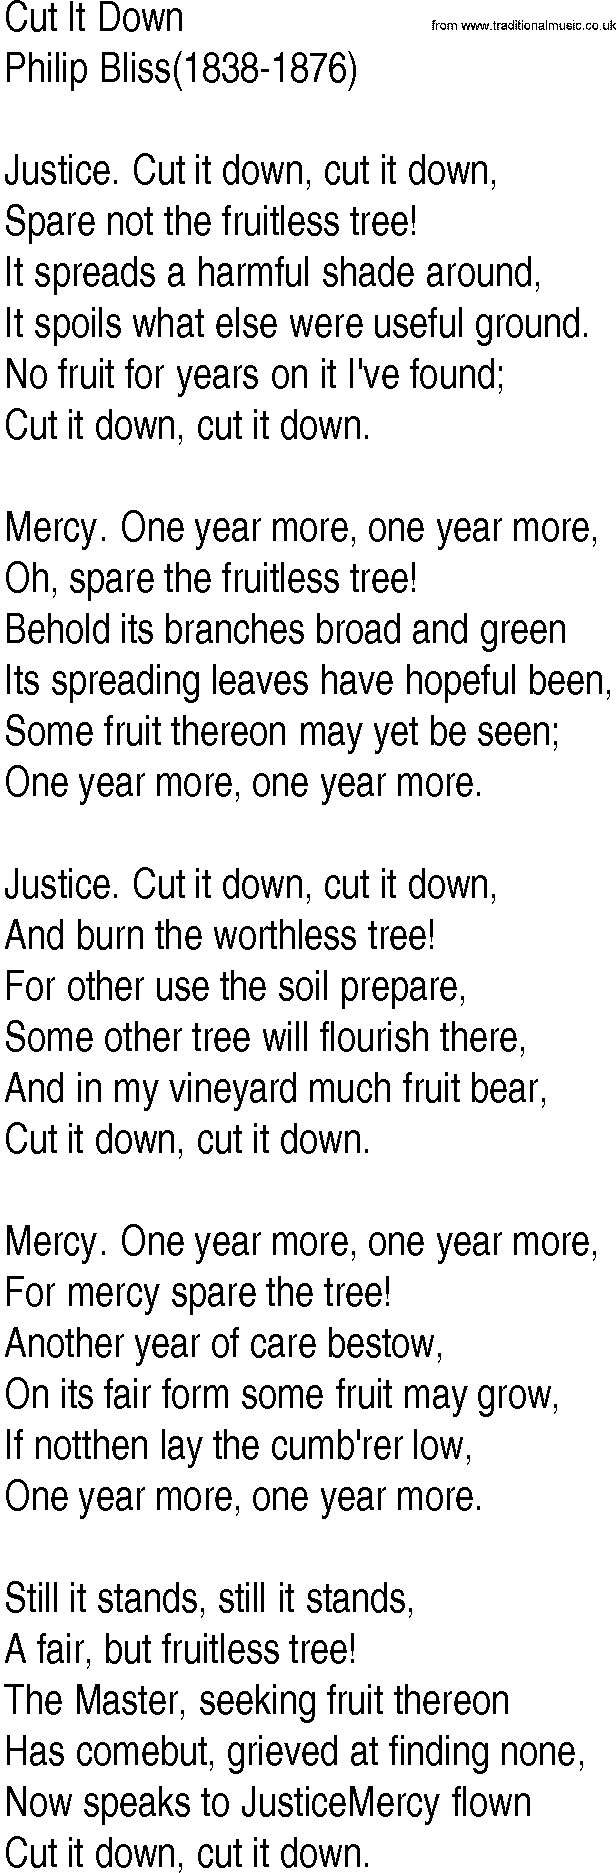 Hymn and Gospel Song: Cut It Down by Philip Bliss lyrics